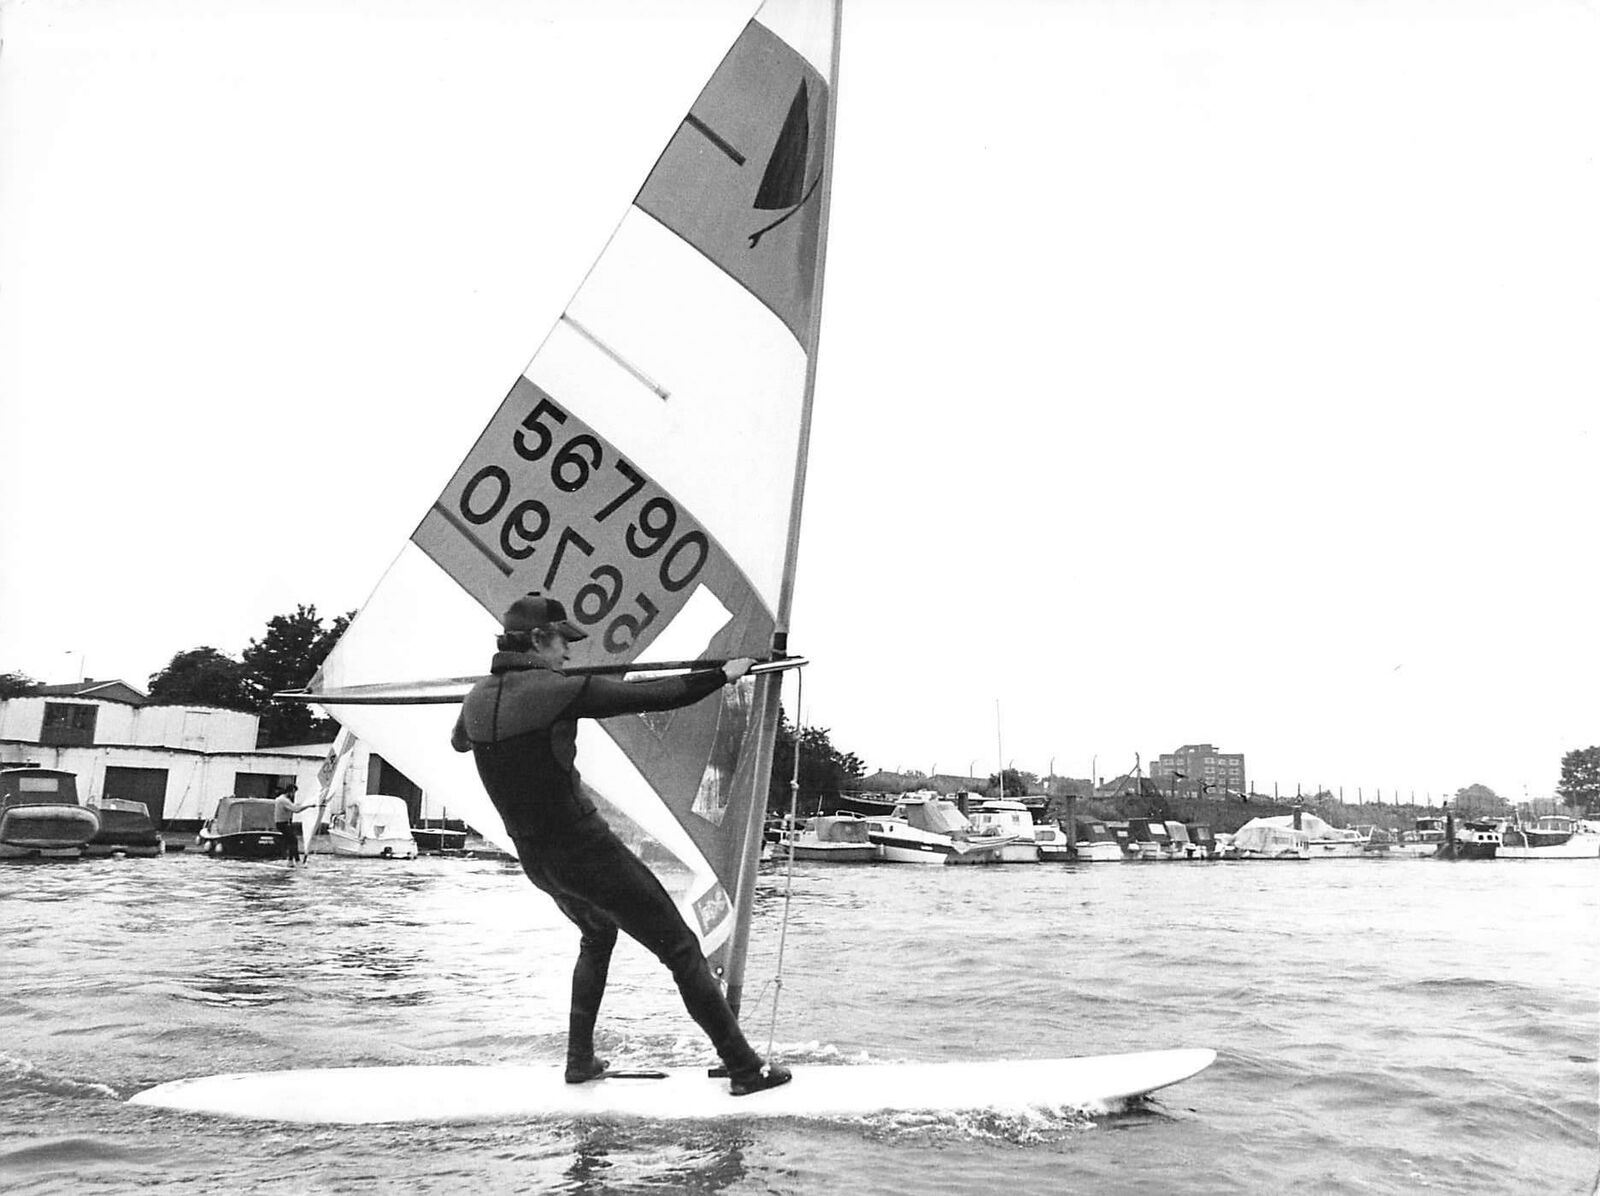 1977 Press Photo Windsurfer London Windsurfing School surfboard sail Surfing kg